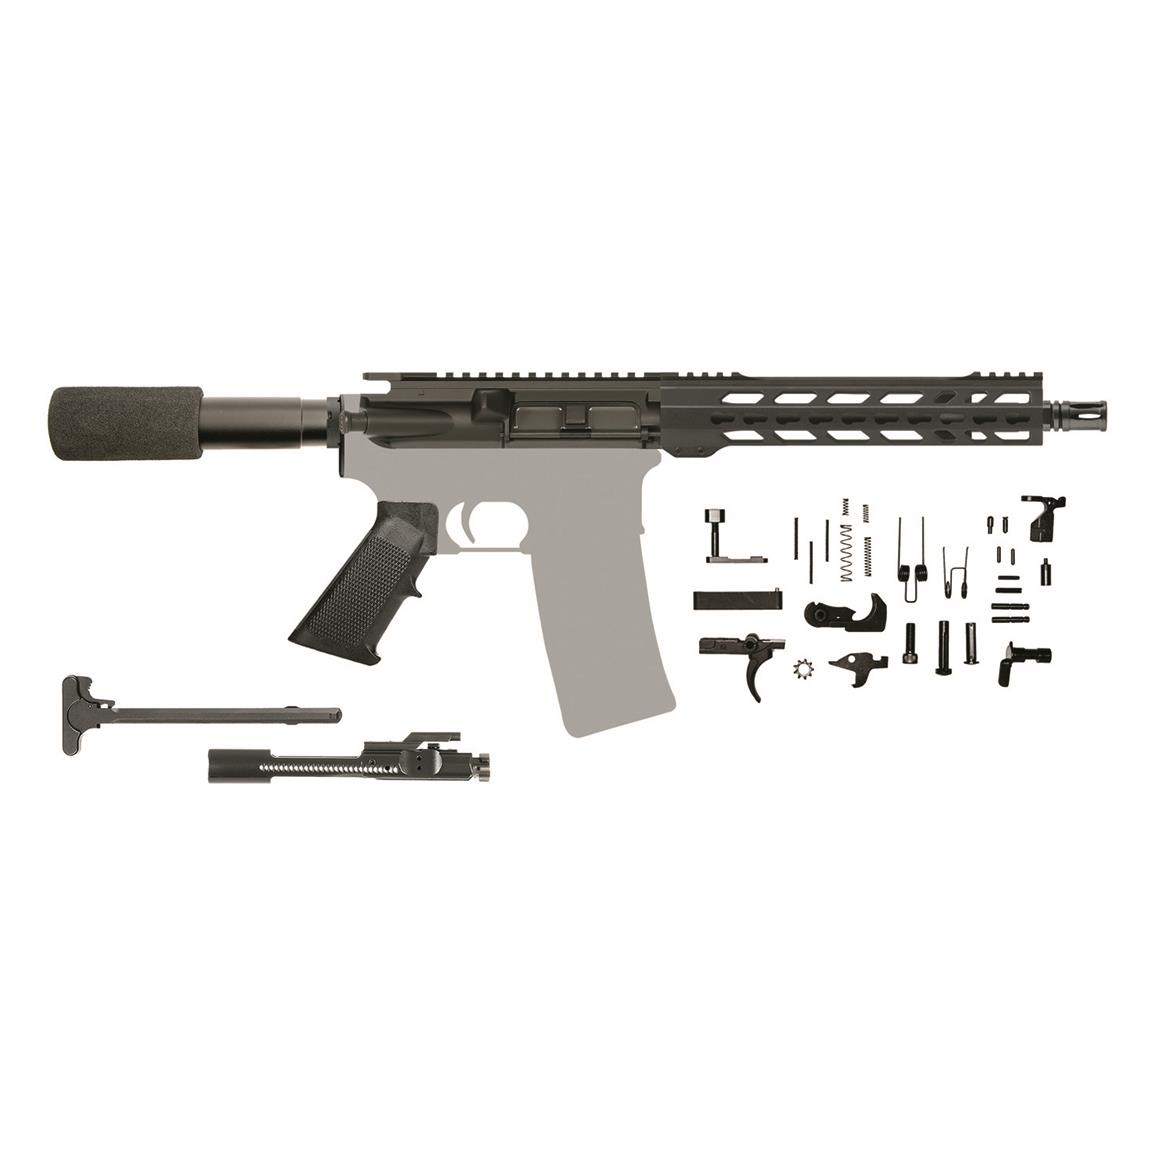 CBC AR-15 Pistol Kit, Semi-auto, 5.56/.223, 10.5" Barrel, KeyMod, No Stripped Lower or Magazine